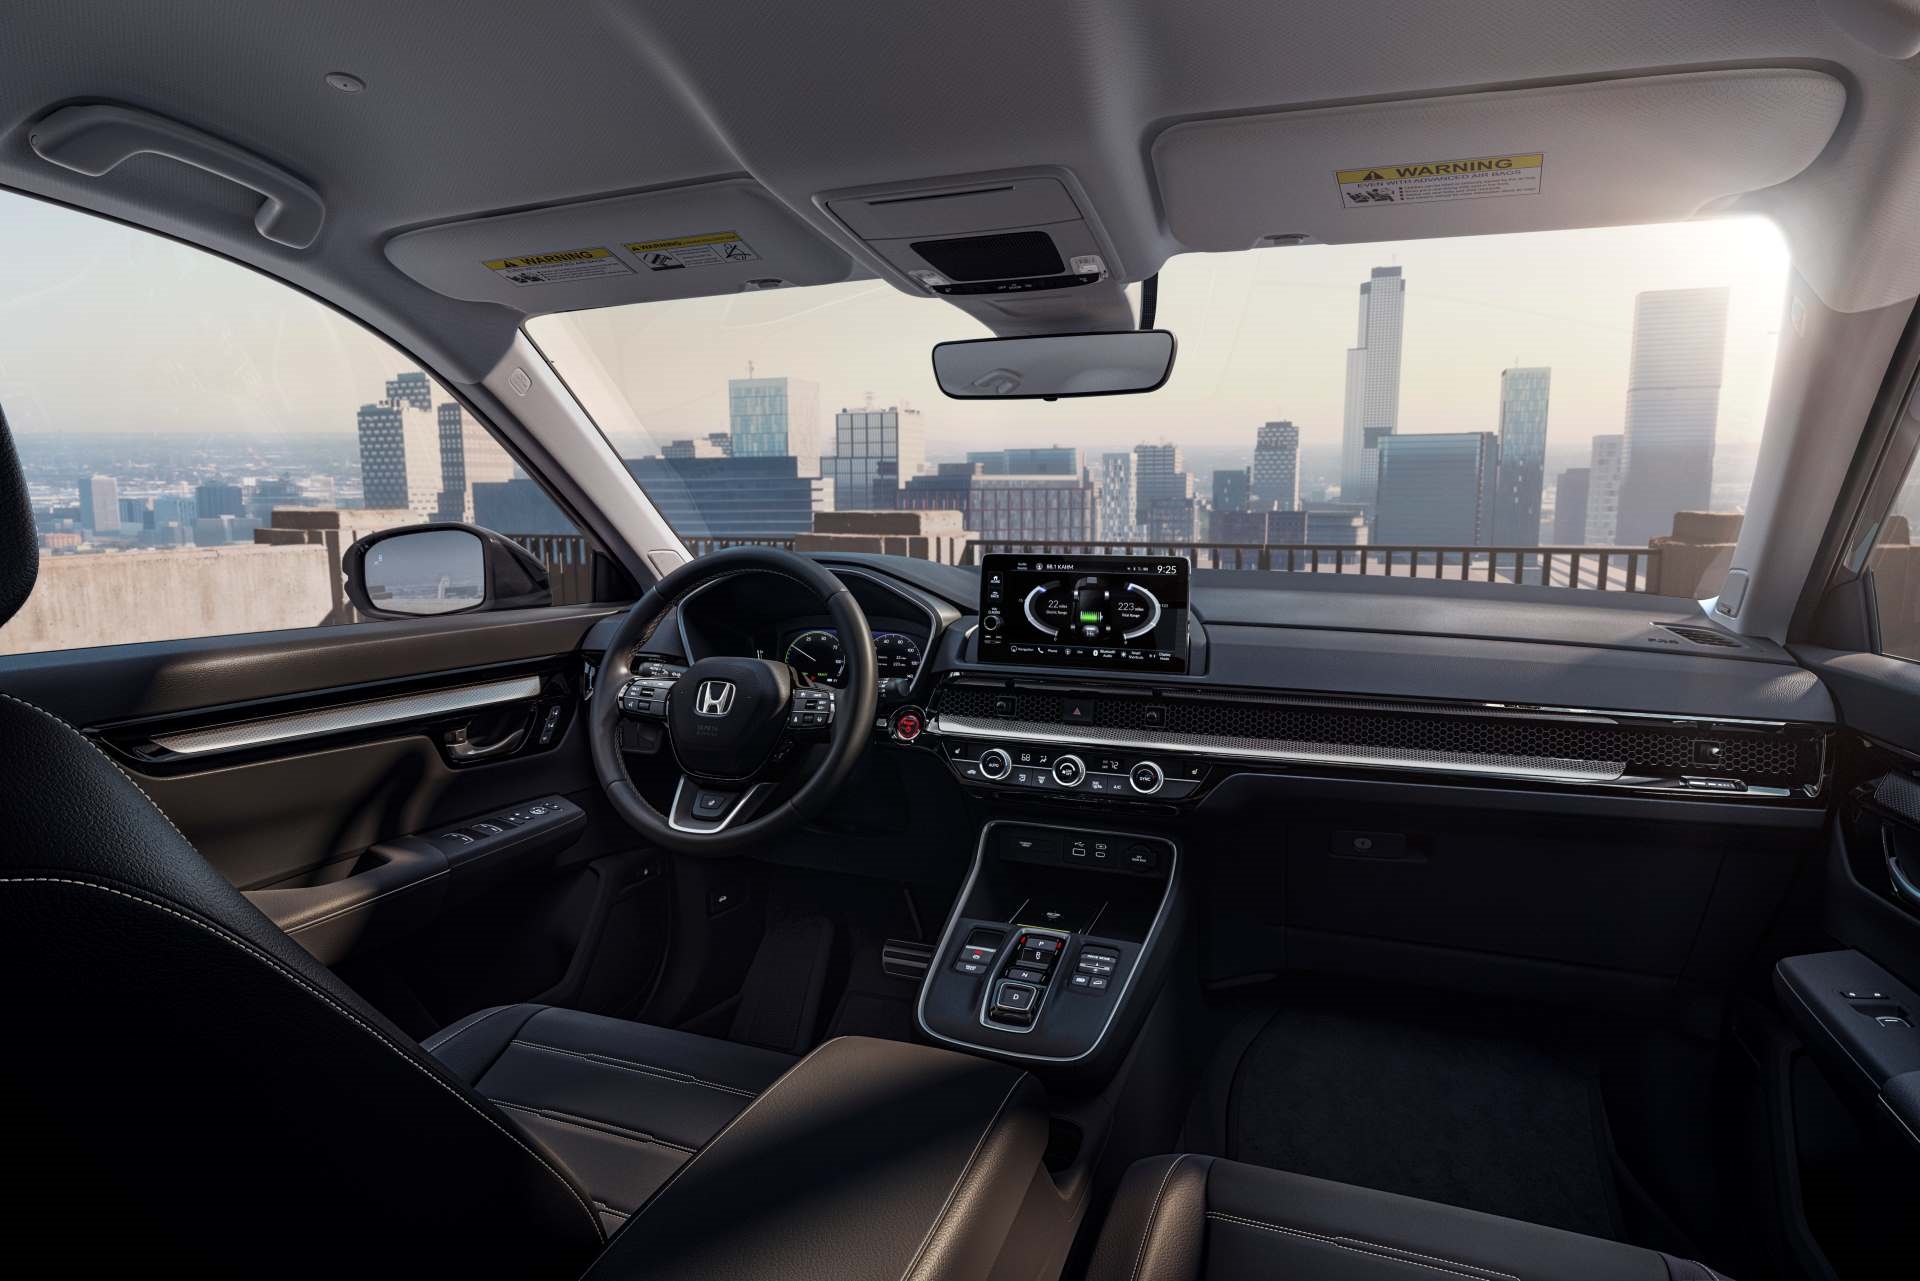 Honda CR-V with futuristic features in impressive urban skyline.